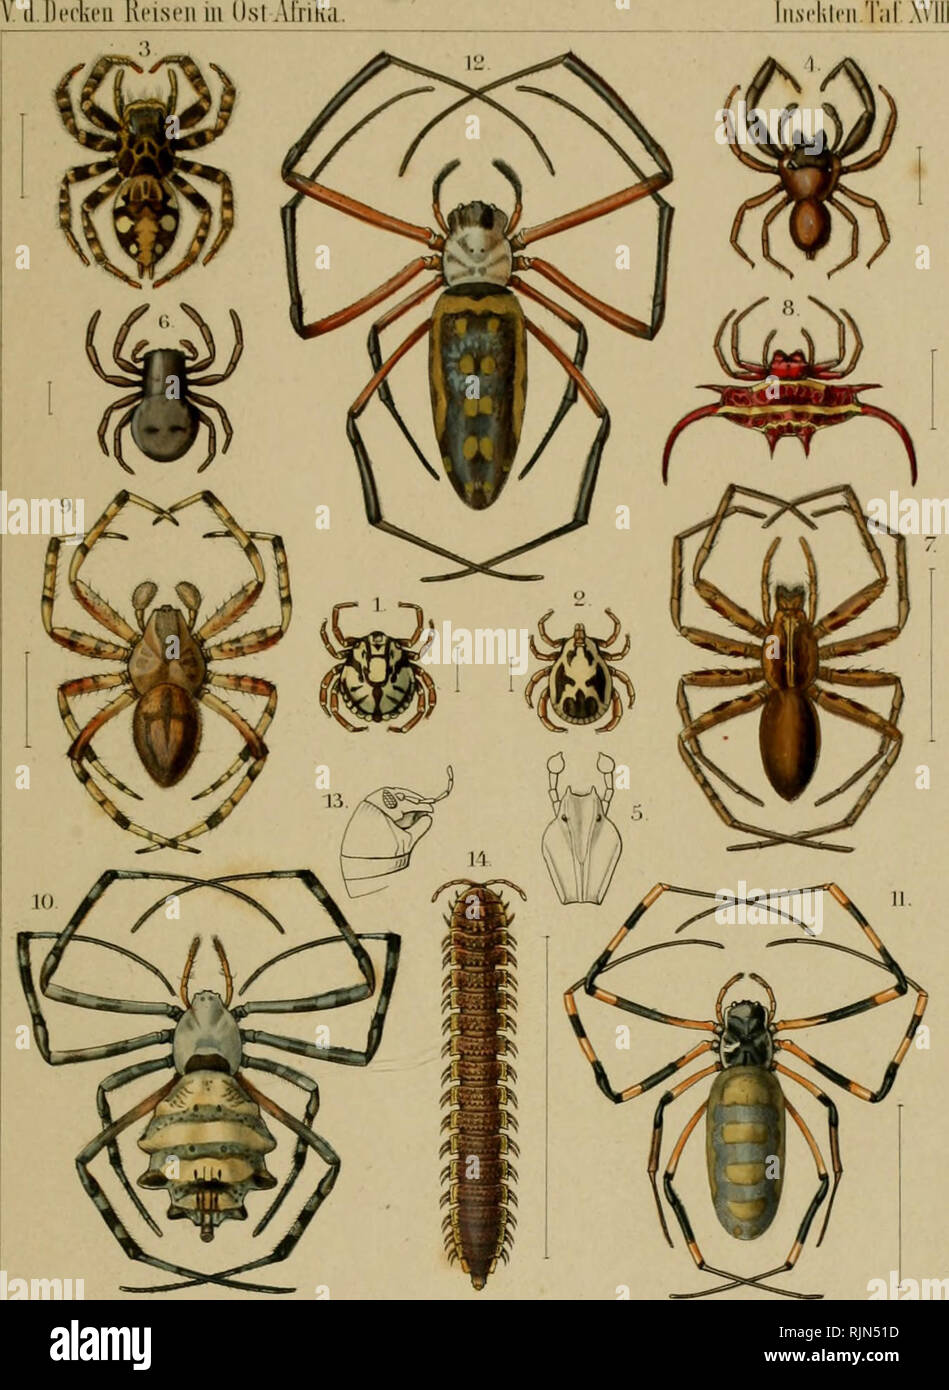 . Baron Carl Claus von der Deckens reisen in Ost-Afrika in den jahren 1859 bis 1865. Natural history. V (l.lleckeu Reisen iii Ust .Afrika. l.Ambh'oinm;i elmnieura.liprst. 1. DermaceiiUir pulrlieDus.Gerst .iPlexipiius immmularis.l'ierst. 4.Pliidippus l)uivuleiitu.s.(Terst.;') Dcjiiopi.s niriu^era.trerst.Ci.Stipliropus luiiubris.lTerst. 7. Phoiieutria decora. (lerst. S.Ga.strarantlia re.supiiiata.Oerst.D.Epi'ira baematoraera.Gerst. lO.Aryvopi' suaissima.liei-st. ll.Xi'pliila hvmeiiaiM.luTst. r.'.^'epb.suiiipluu.sa.dprst. 13. SpitostrepfiLS macrofis.Oerst. l4.Polv(lesmii.s mastophoms. Gerst.. Pl Stock Photo